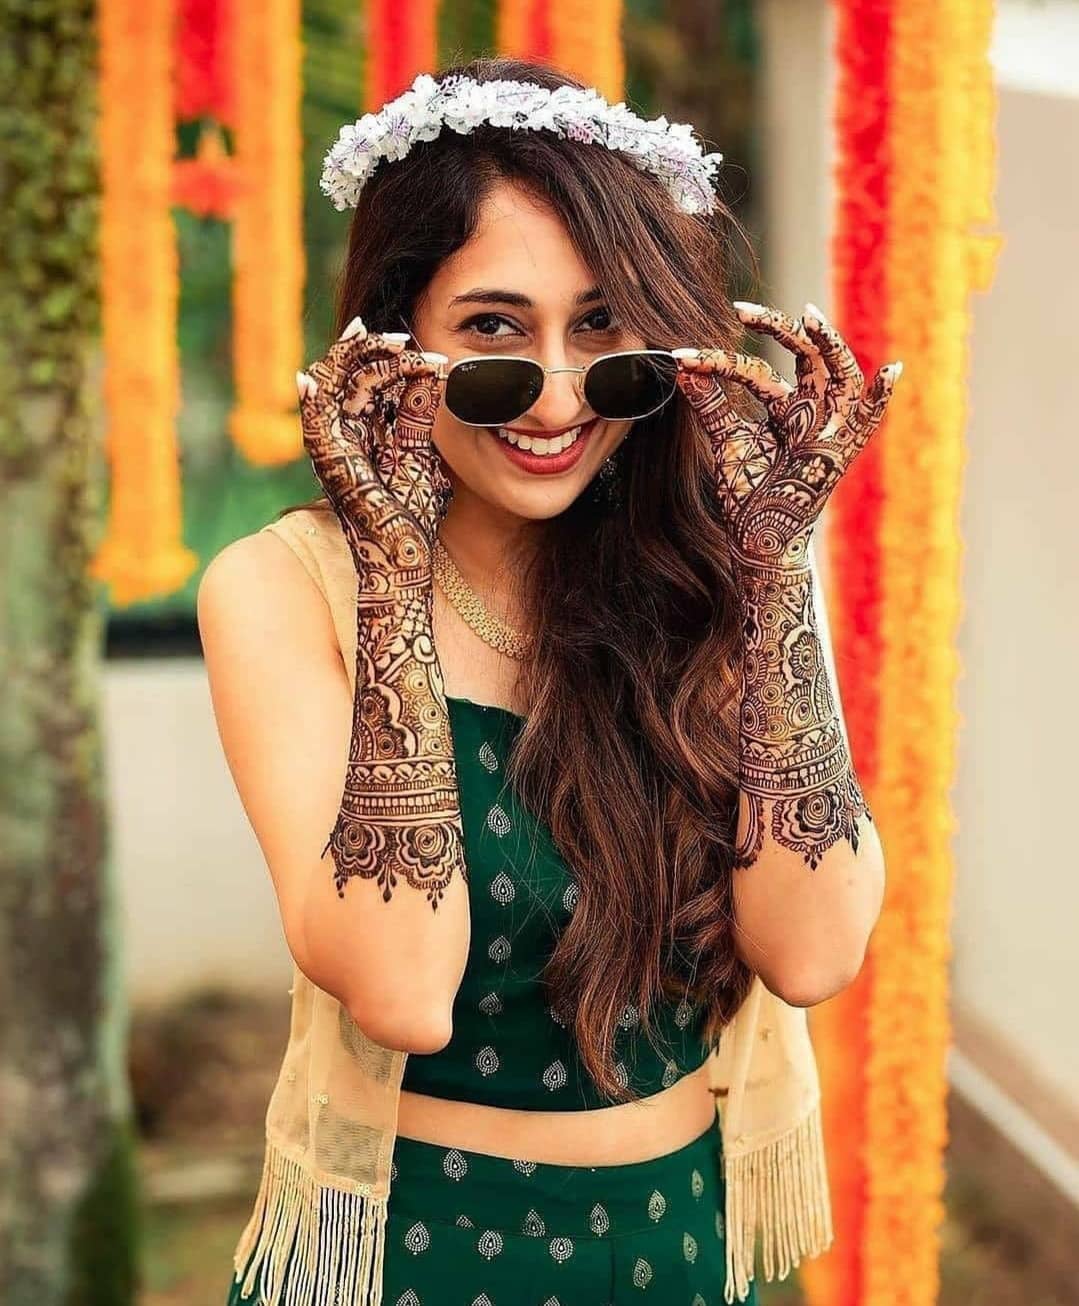 18 Sensational Henna Designs | World's Best Wedding Photography